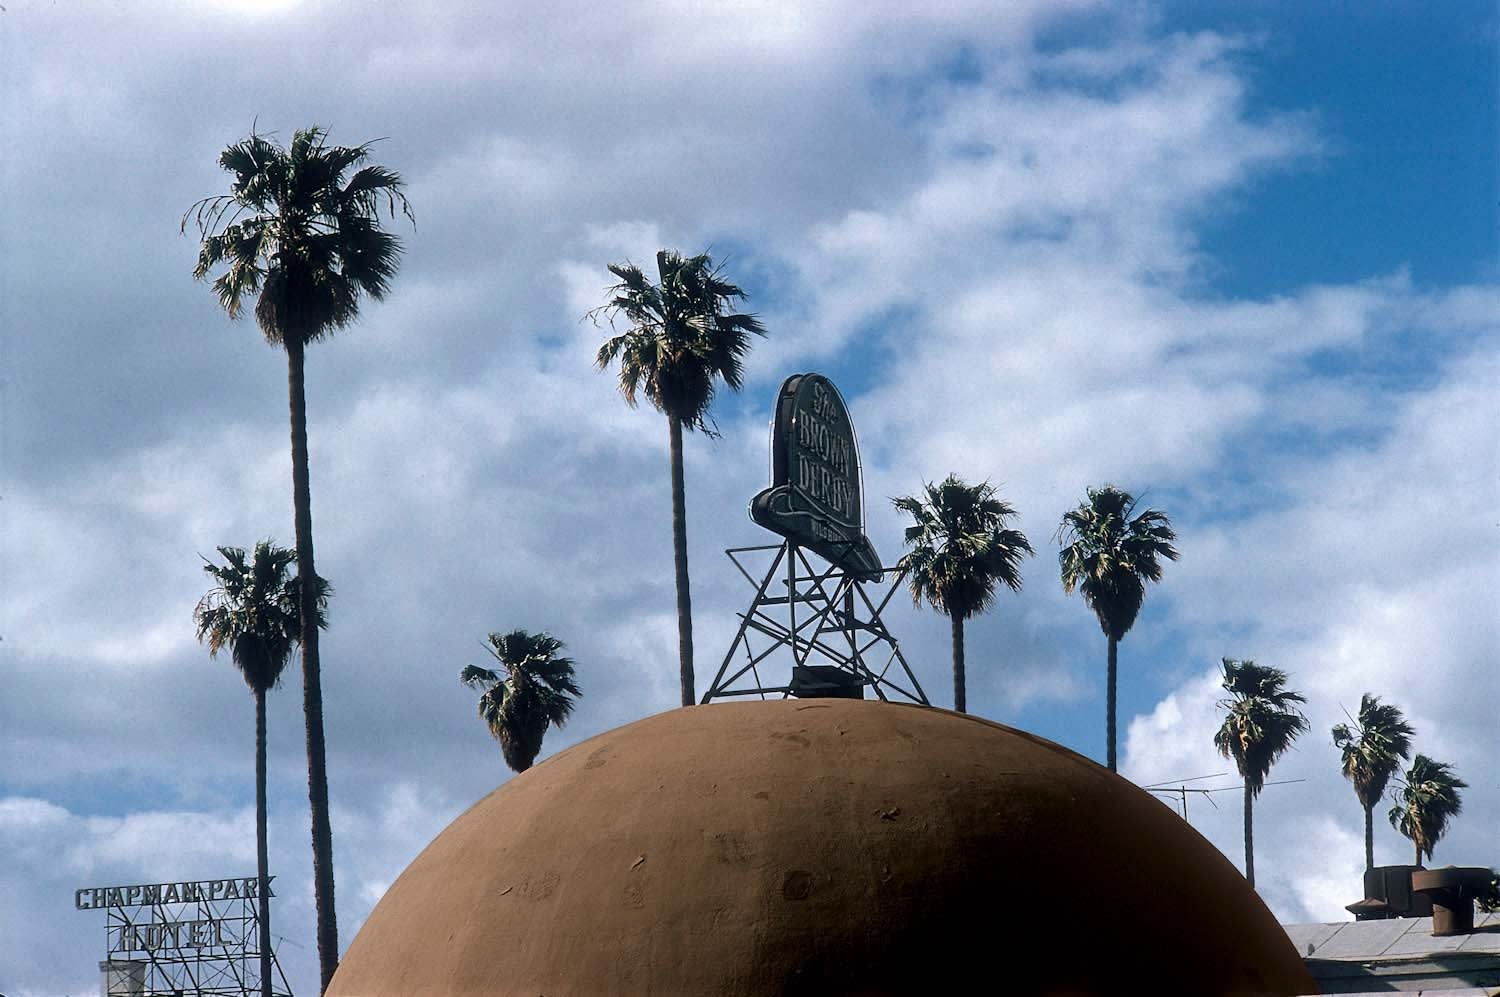 Elliott Erwitt, Hollywood, CA, USA, 1956